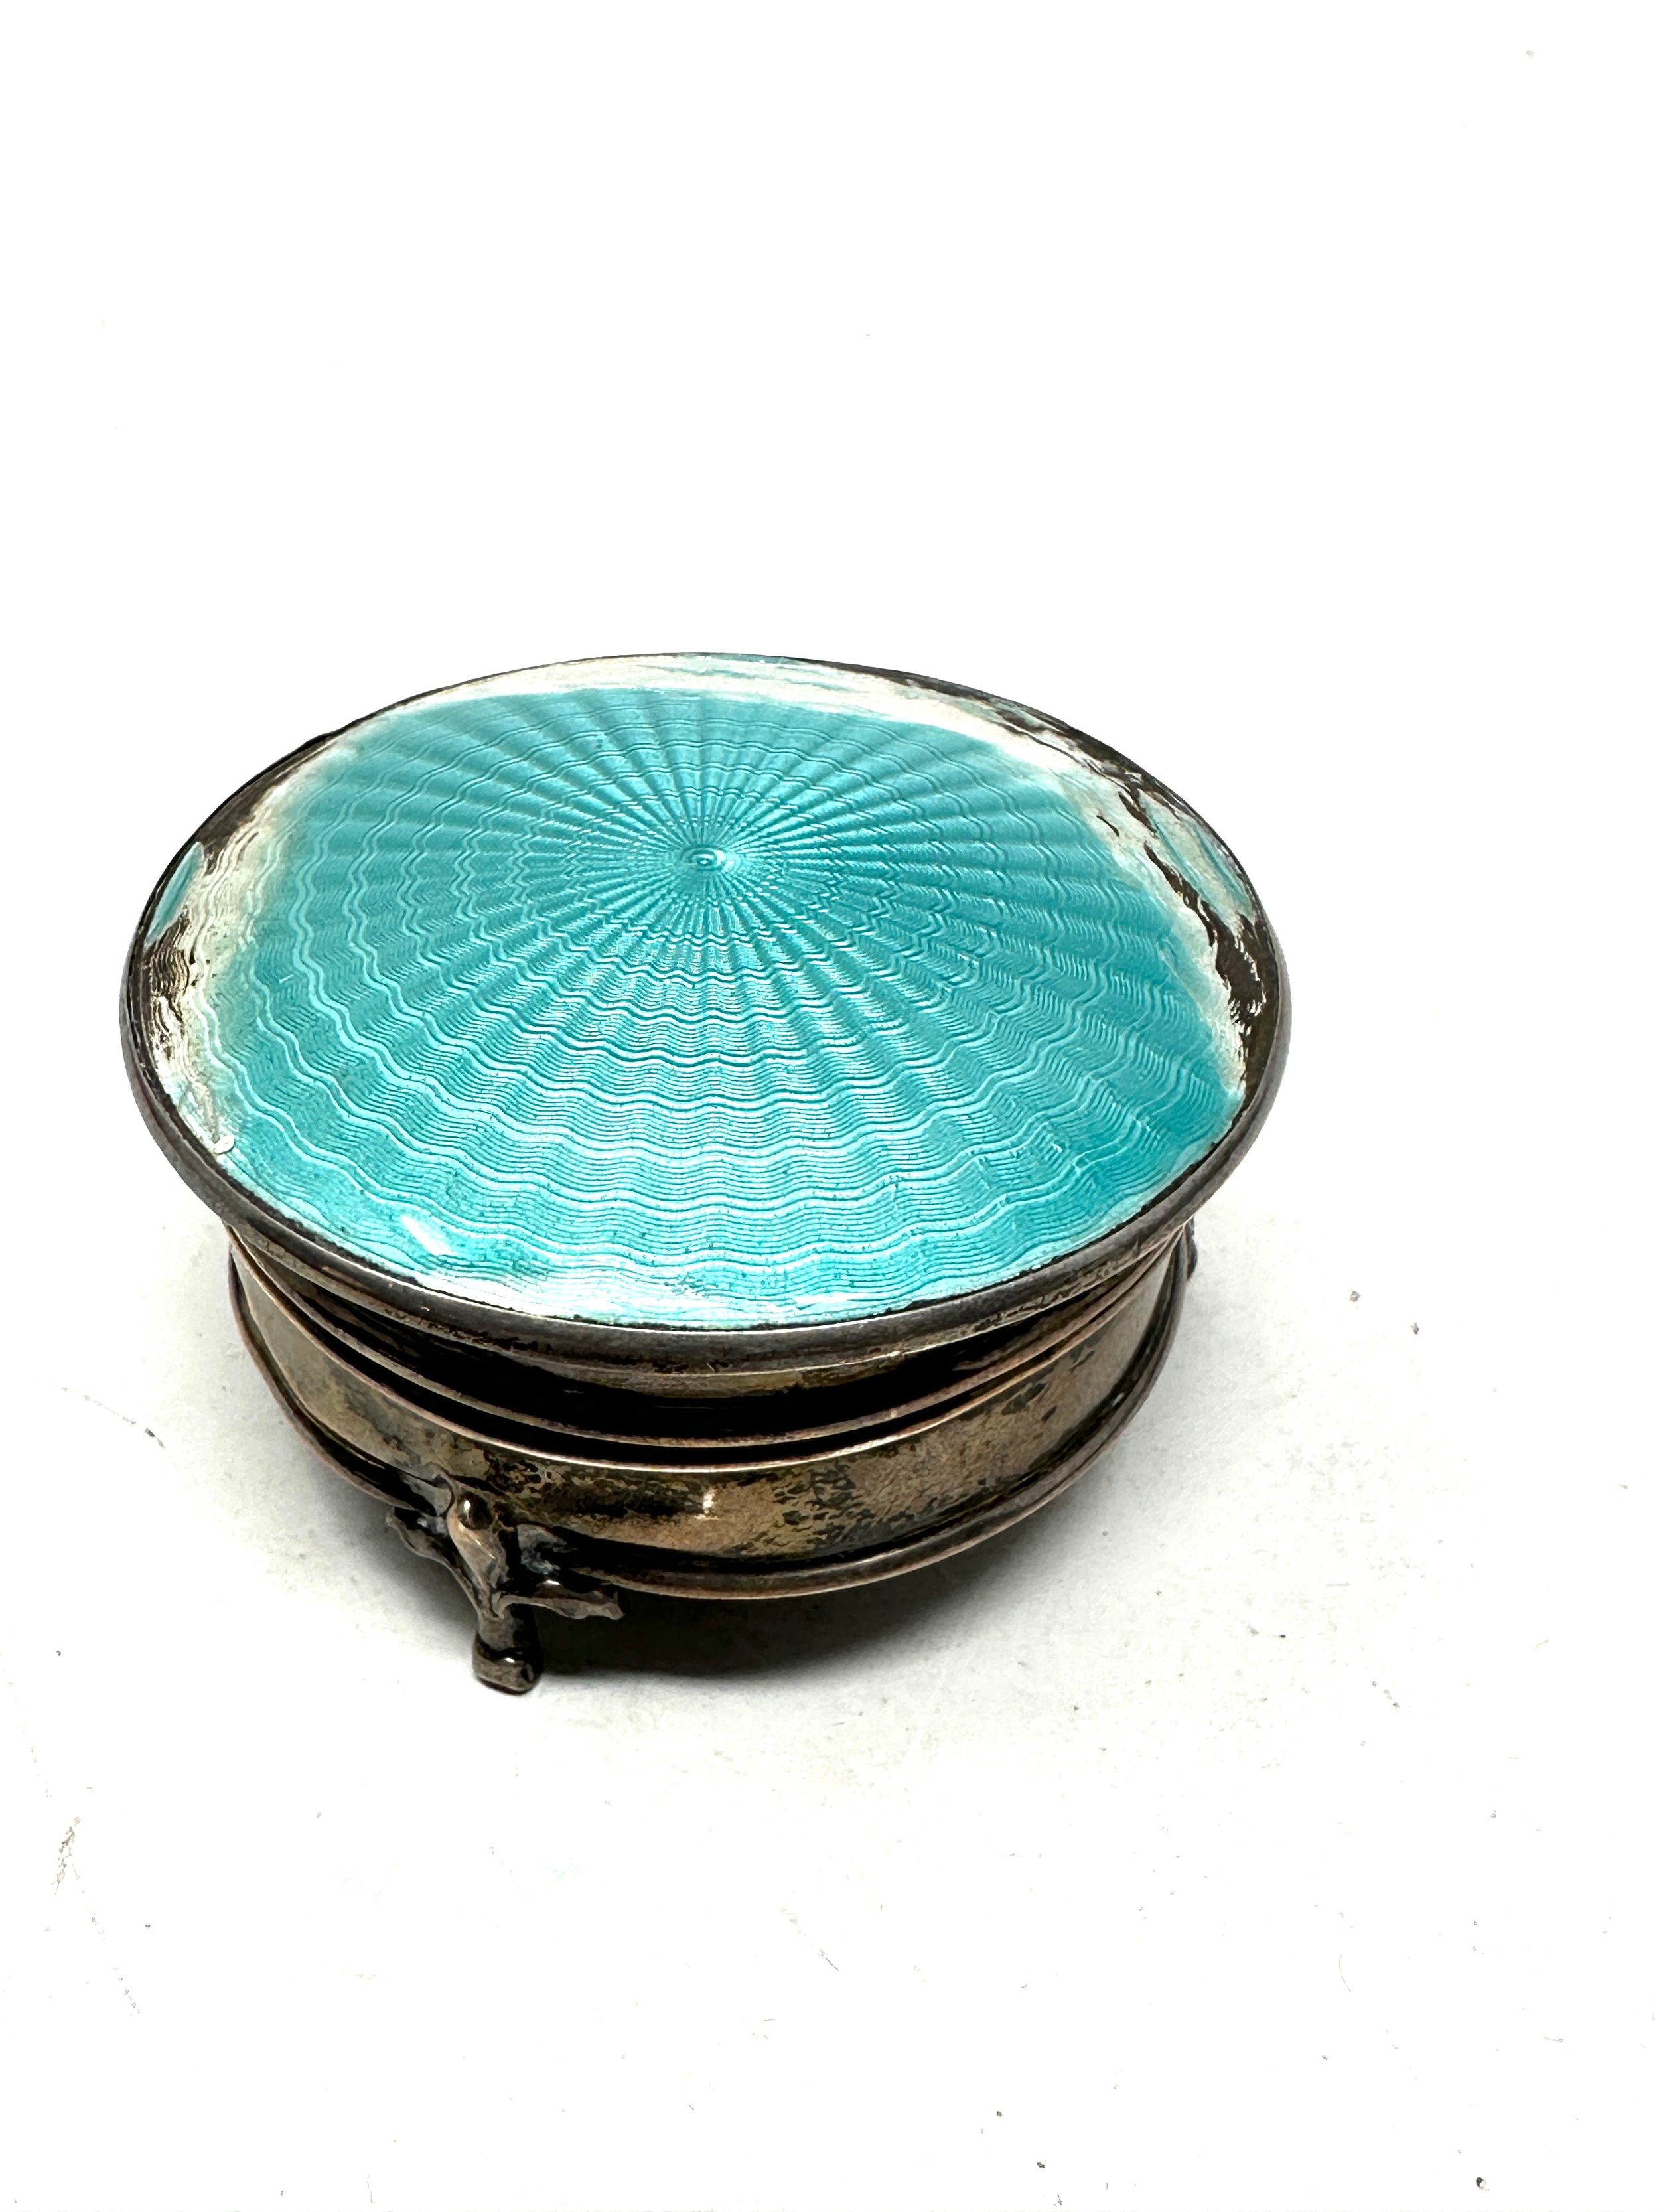 antique silver & enamel ring box wear to enamel - Image 2 of 4